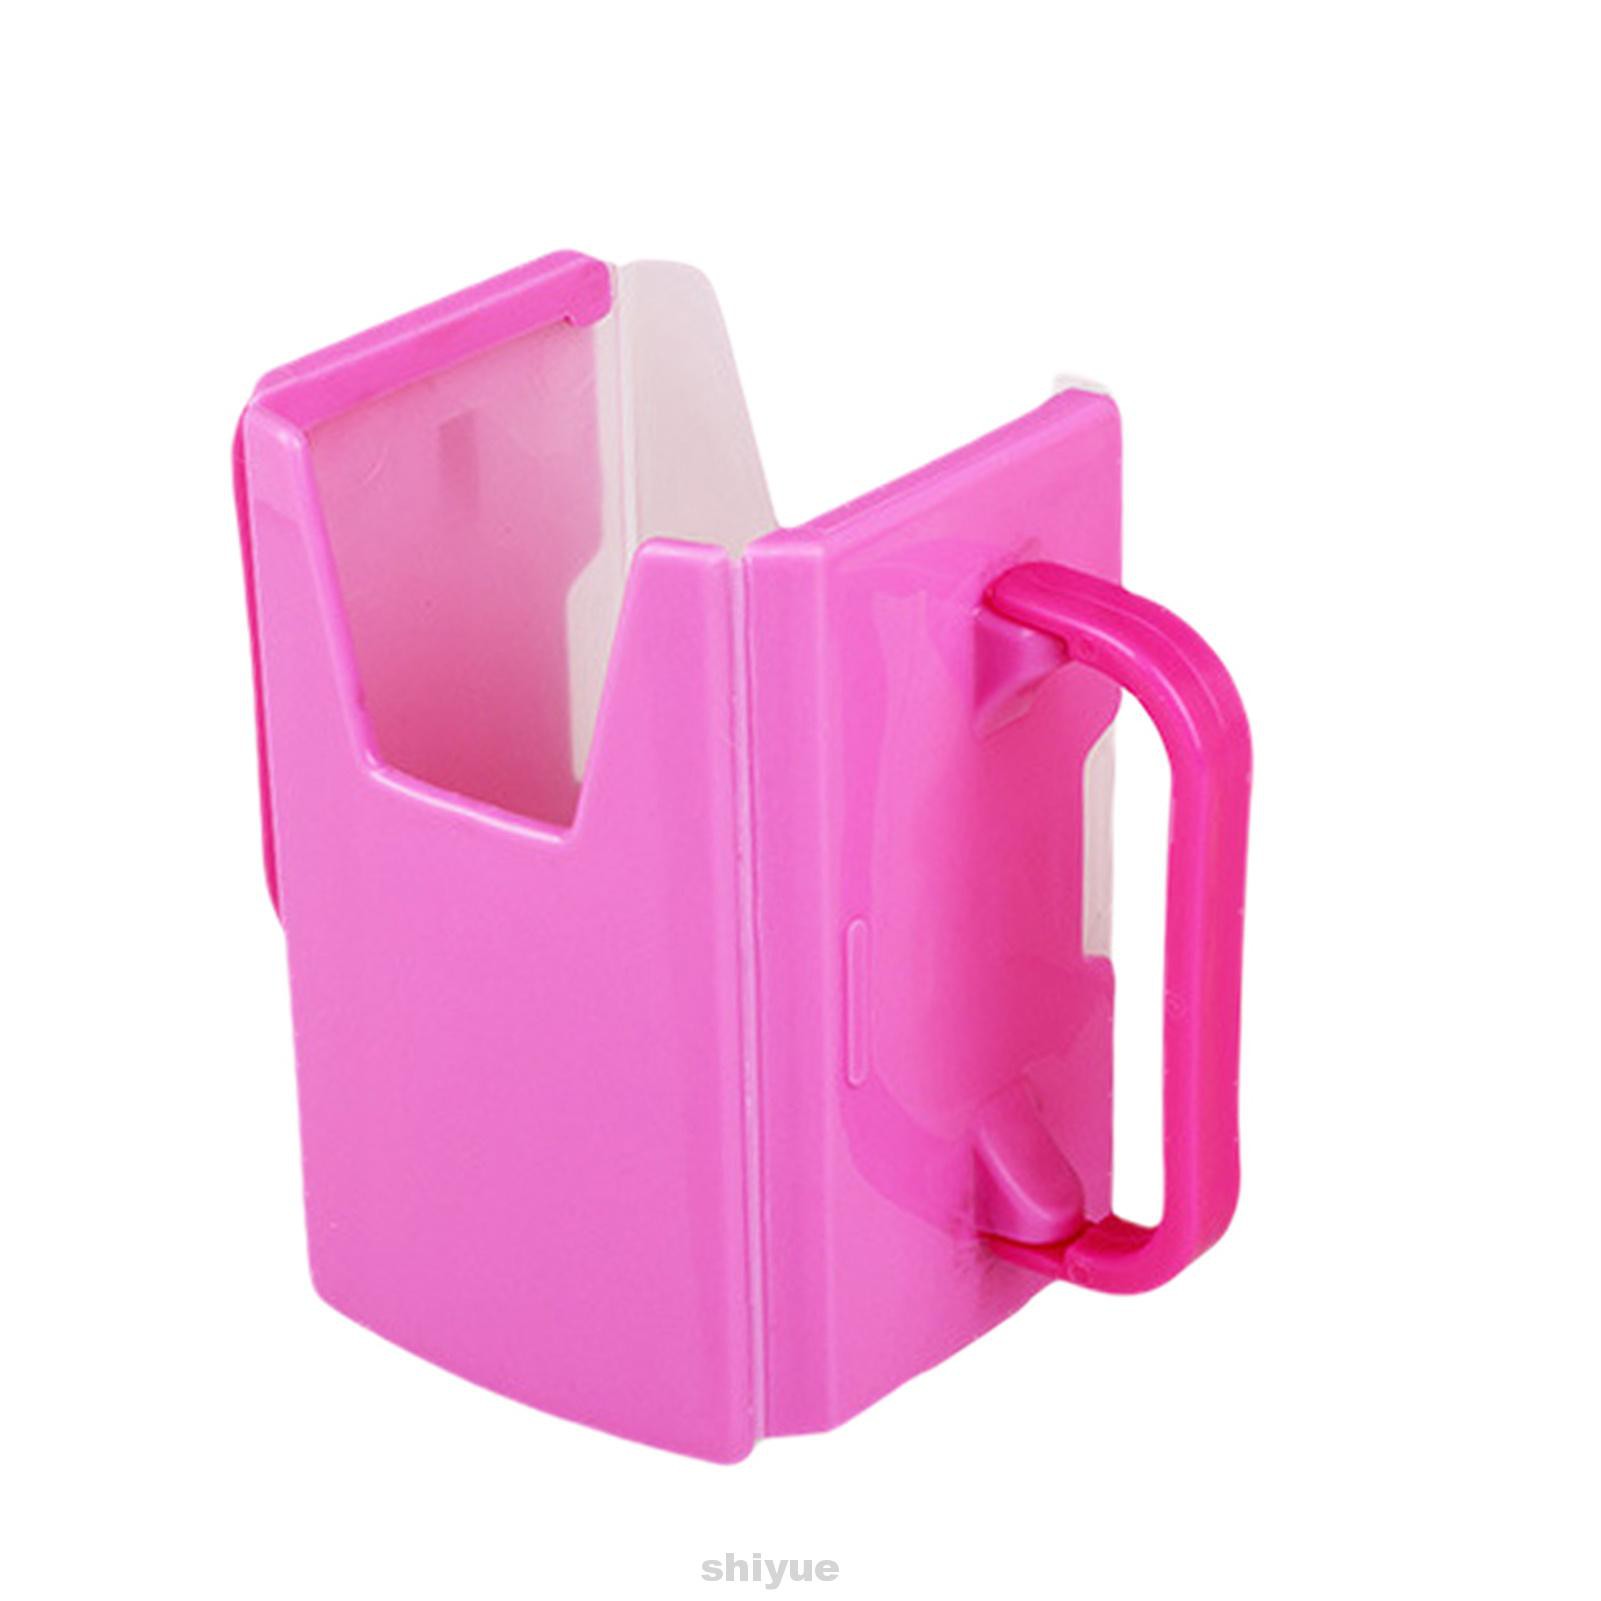 Drink Practical Storage Foldable Adjustable Size With Handles Protable Bottle Cup Milk Box Holder